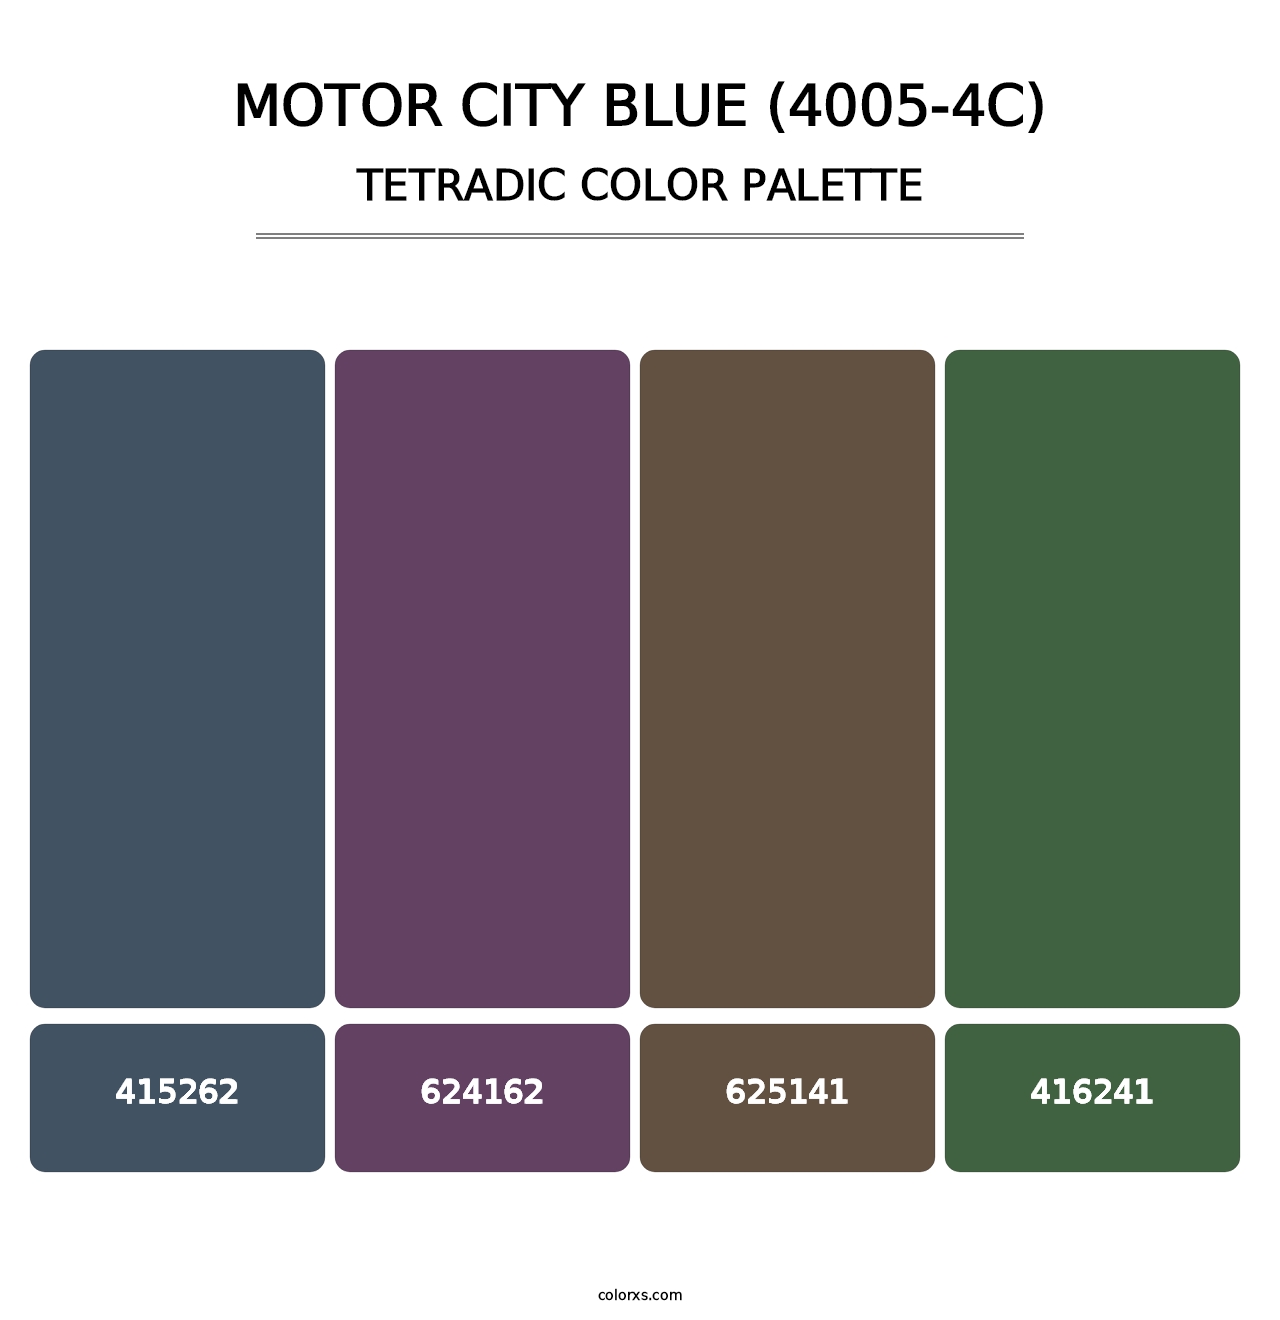 Motor City Blue (4005-4C) - Tetradic Color Palette